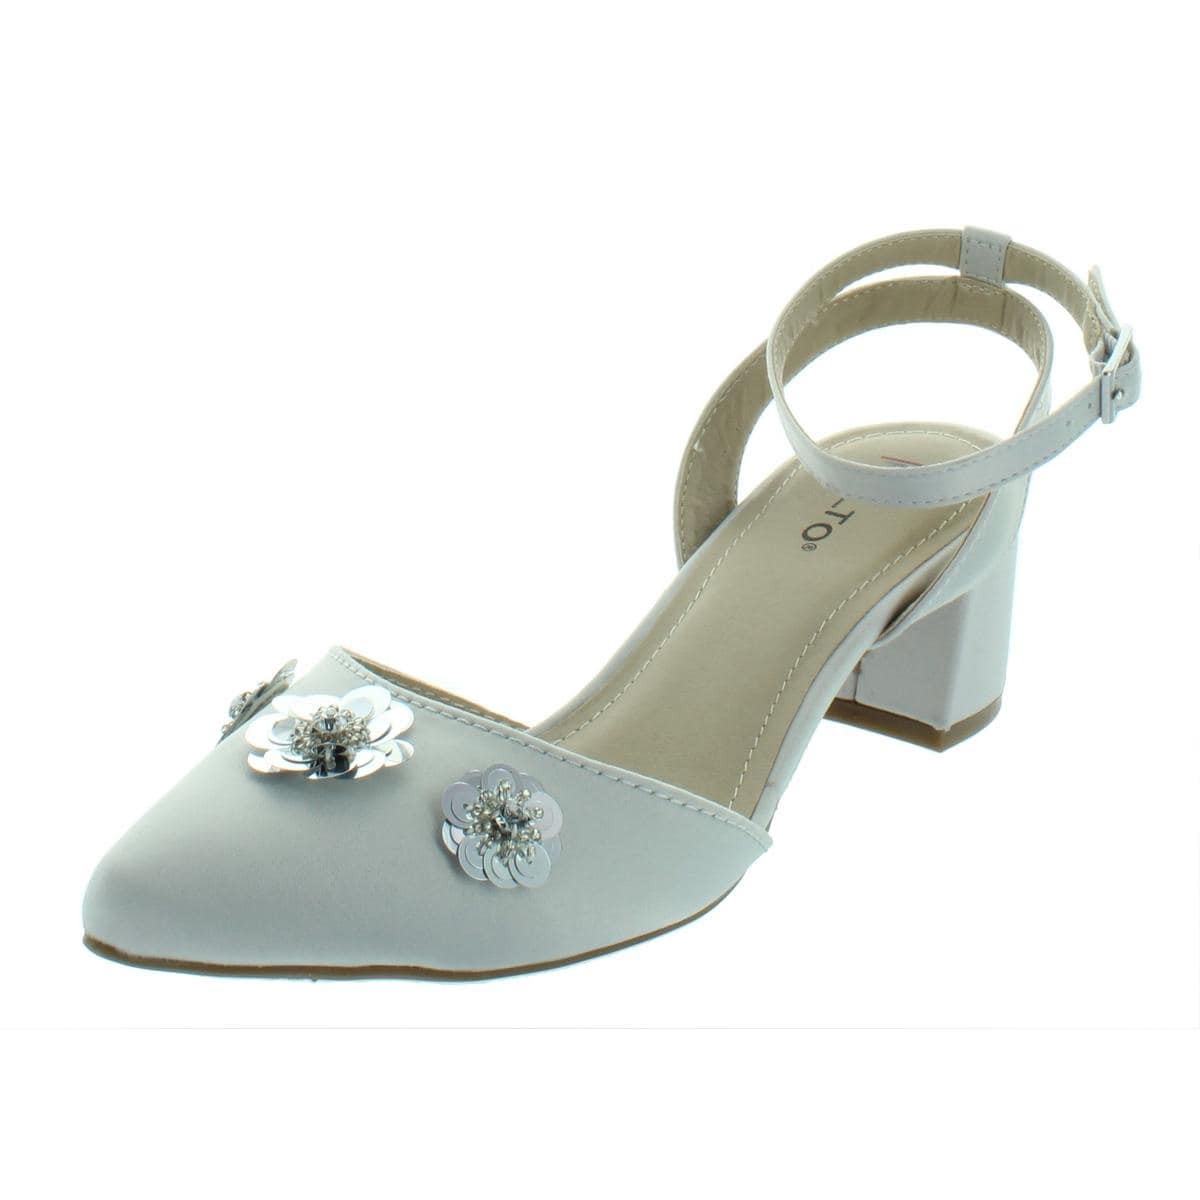 gray satin heels